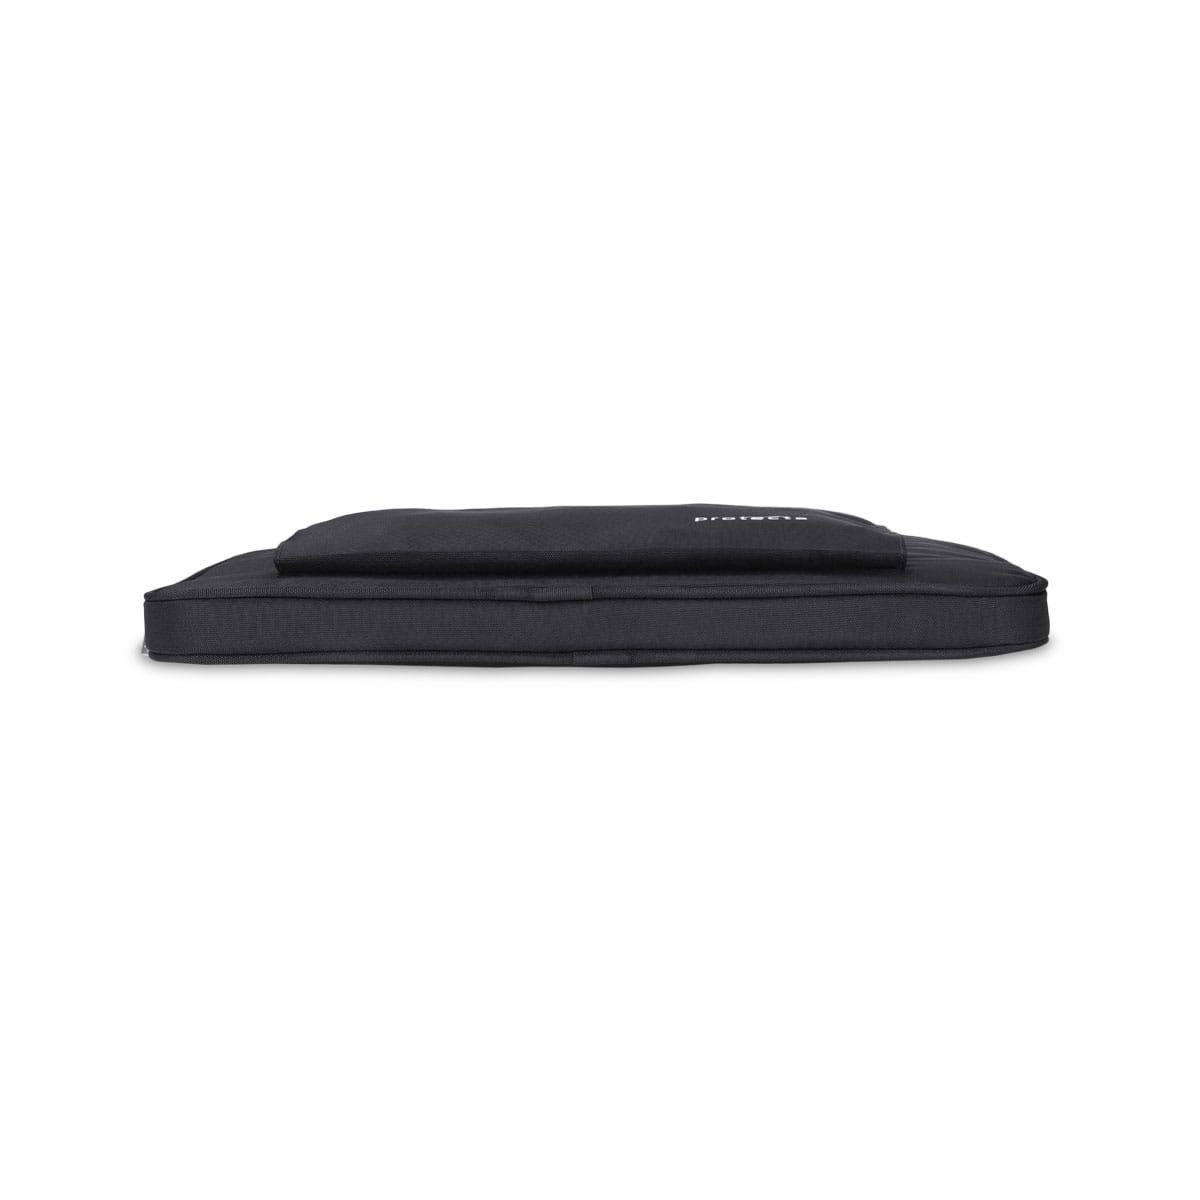 Black | Protecta Headquarter MacBook Sleeve-4